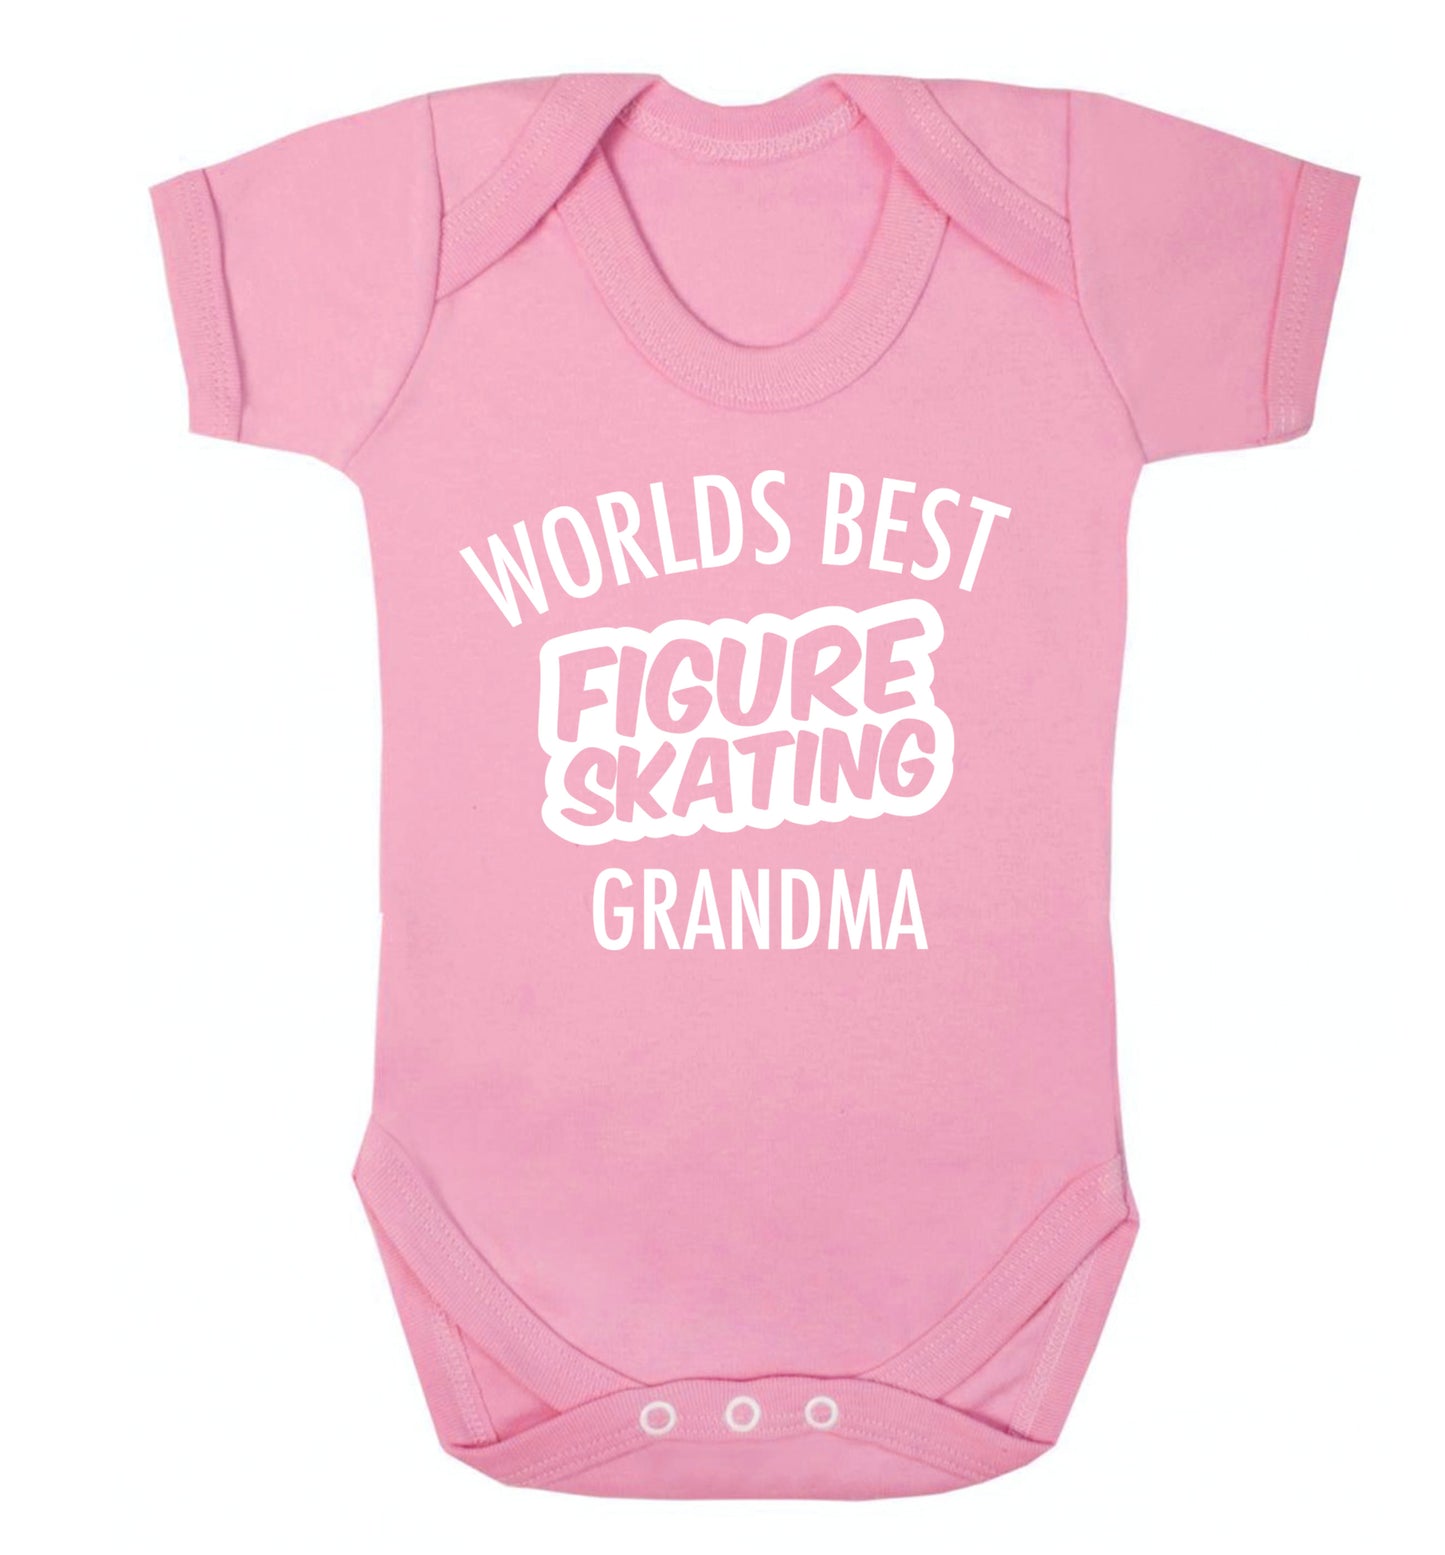 Worlds best figure skating grandma Baby Vest pale pink 18-24 months